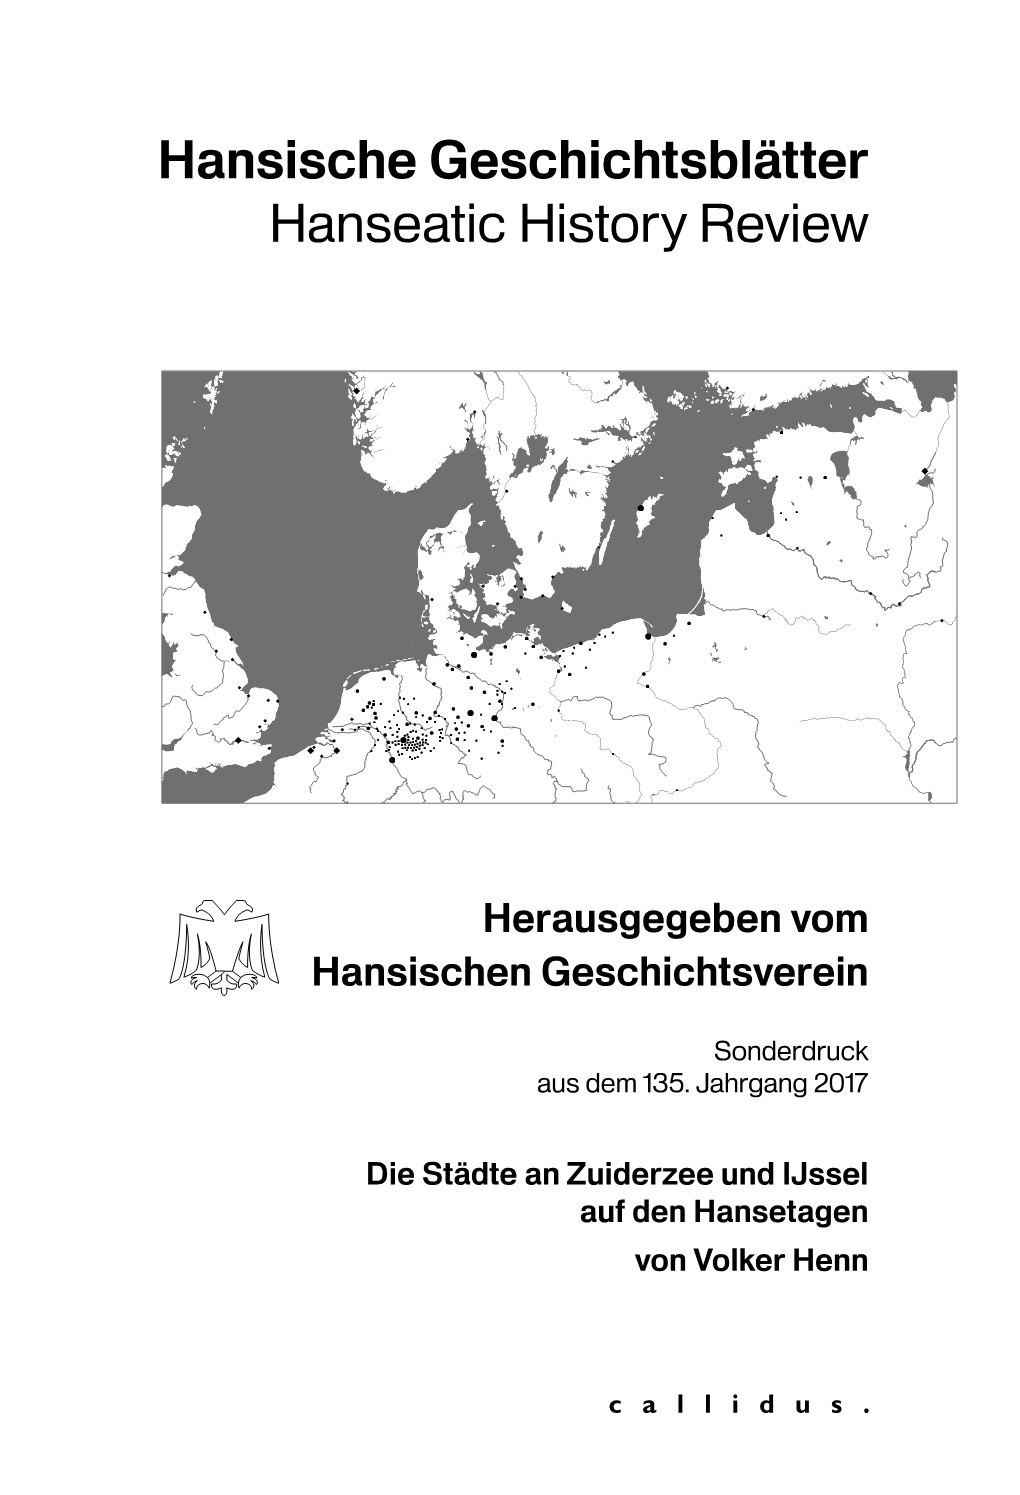 Hansische Geschichtsblätter Hanseatic History Review